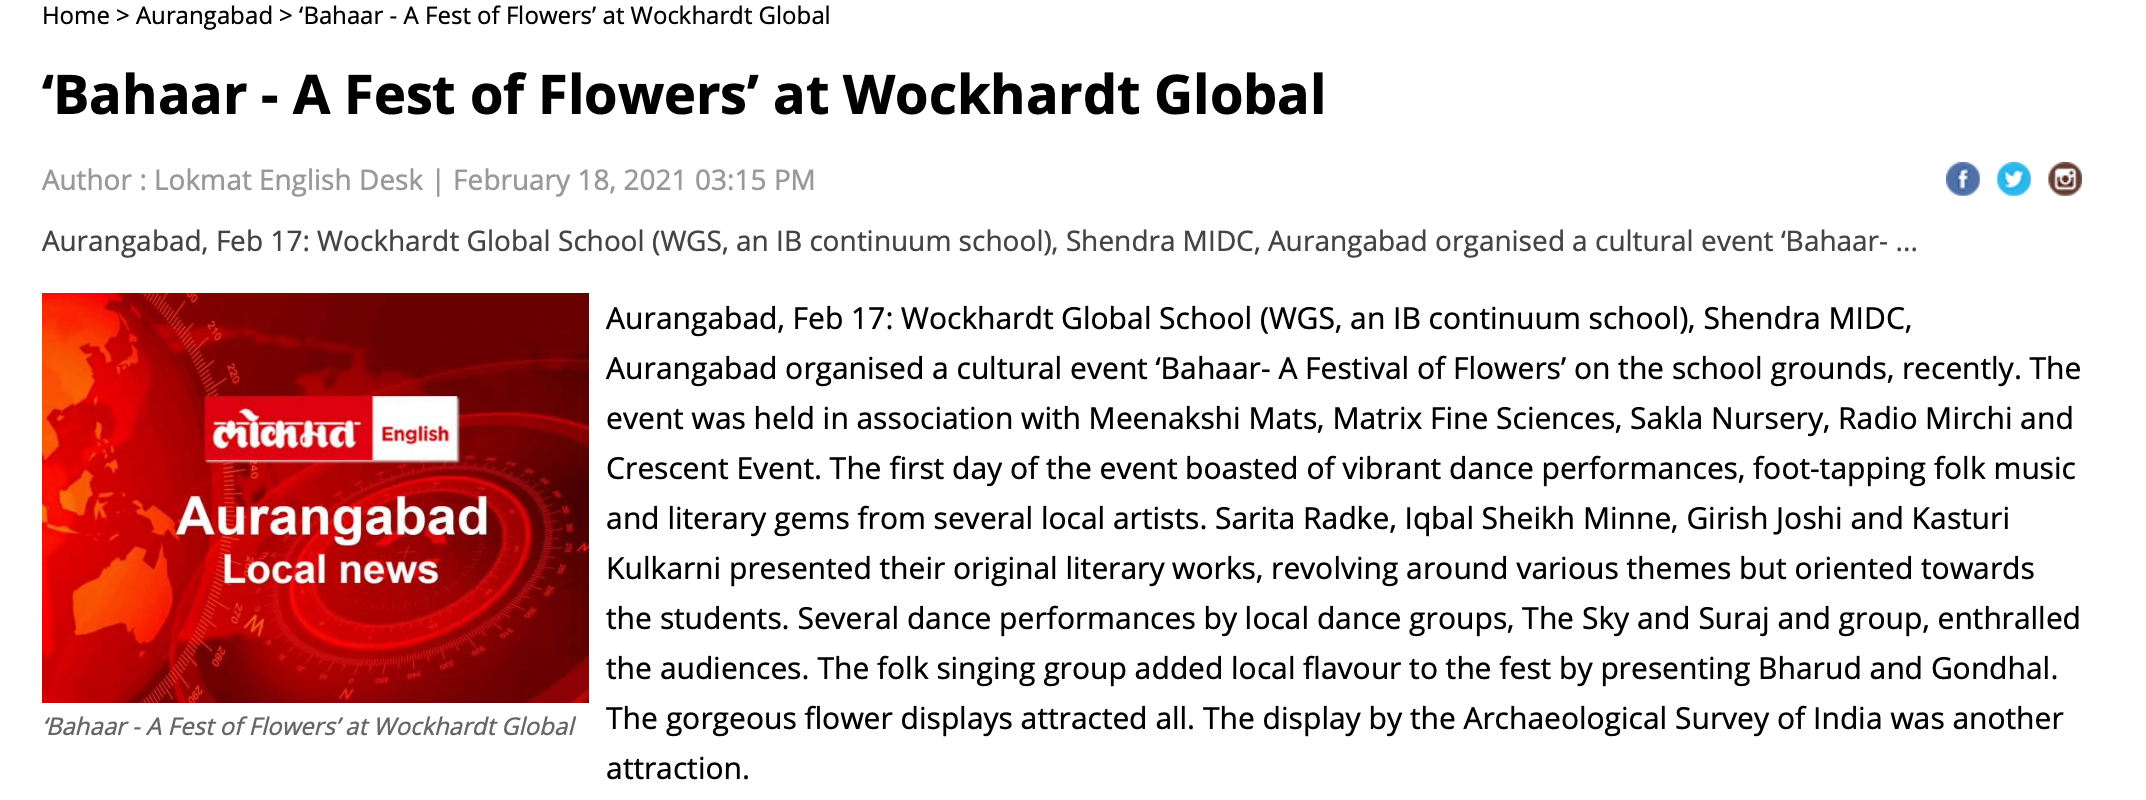 https://english.lokmat.com/aurangabad/bahaar-a-fest-of-flowers-at-wockhardt-global/